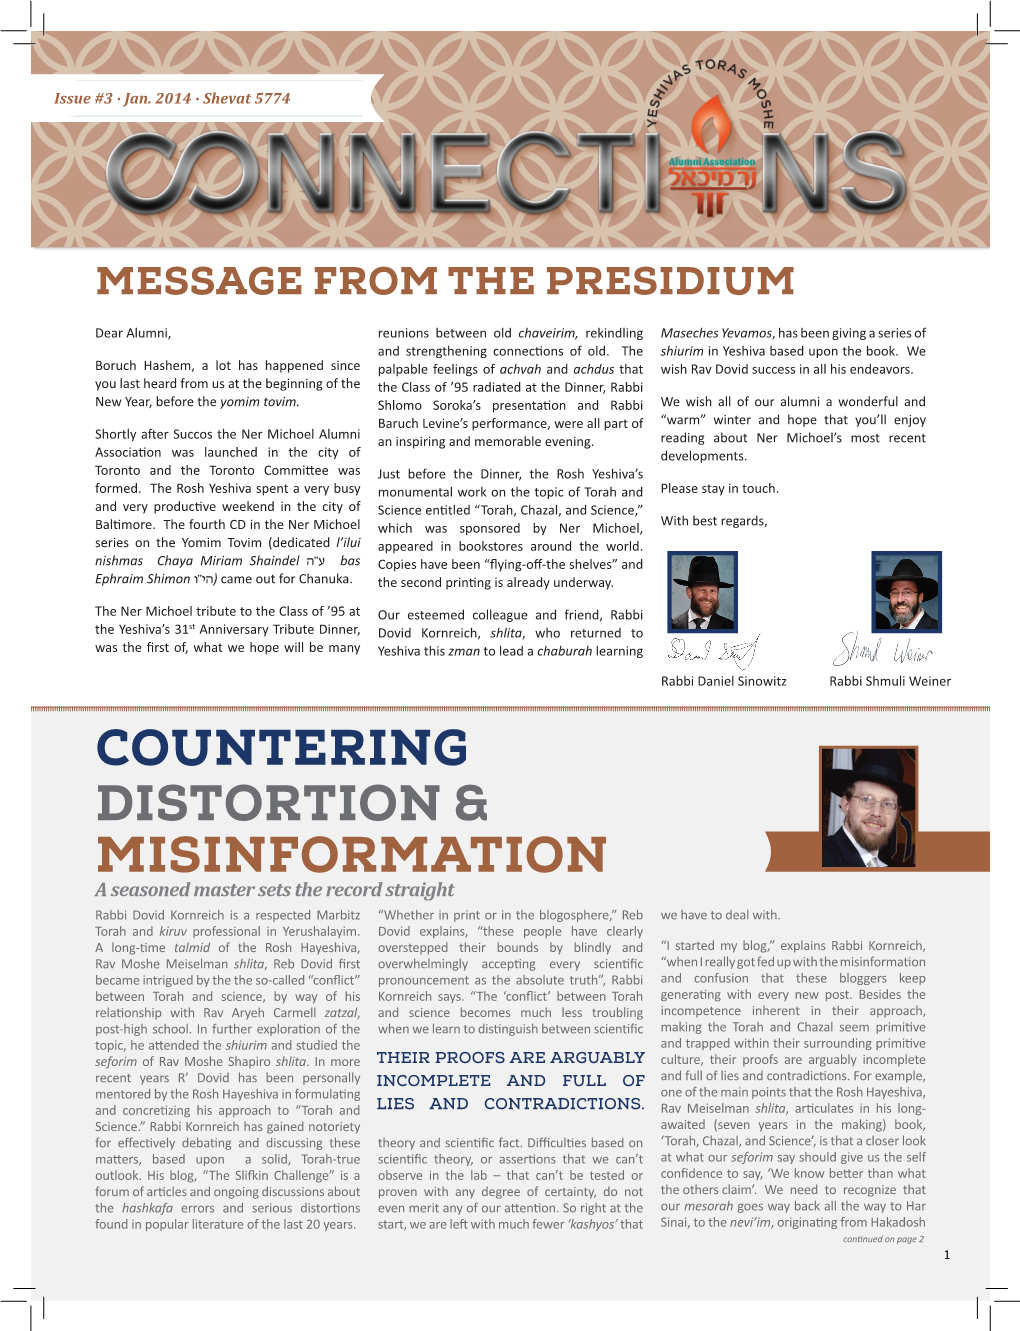 Countering Distortion & Misinformation